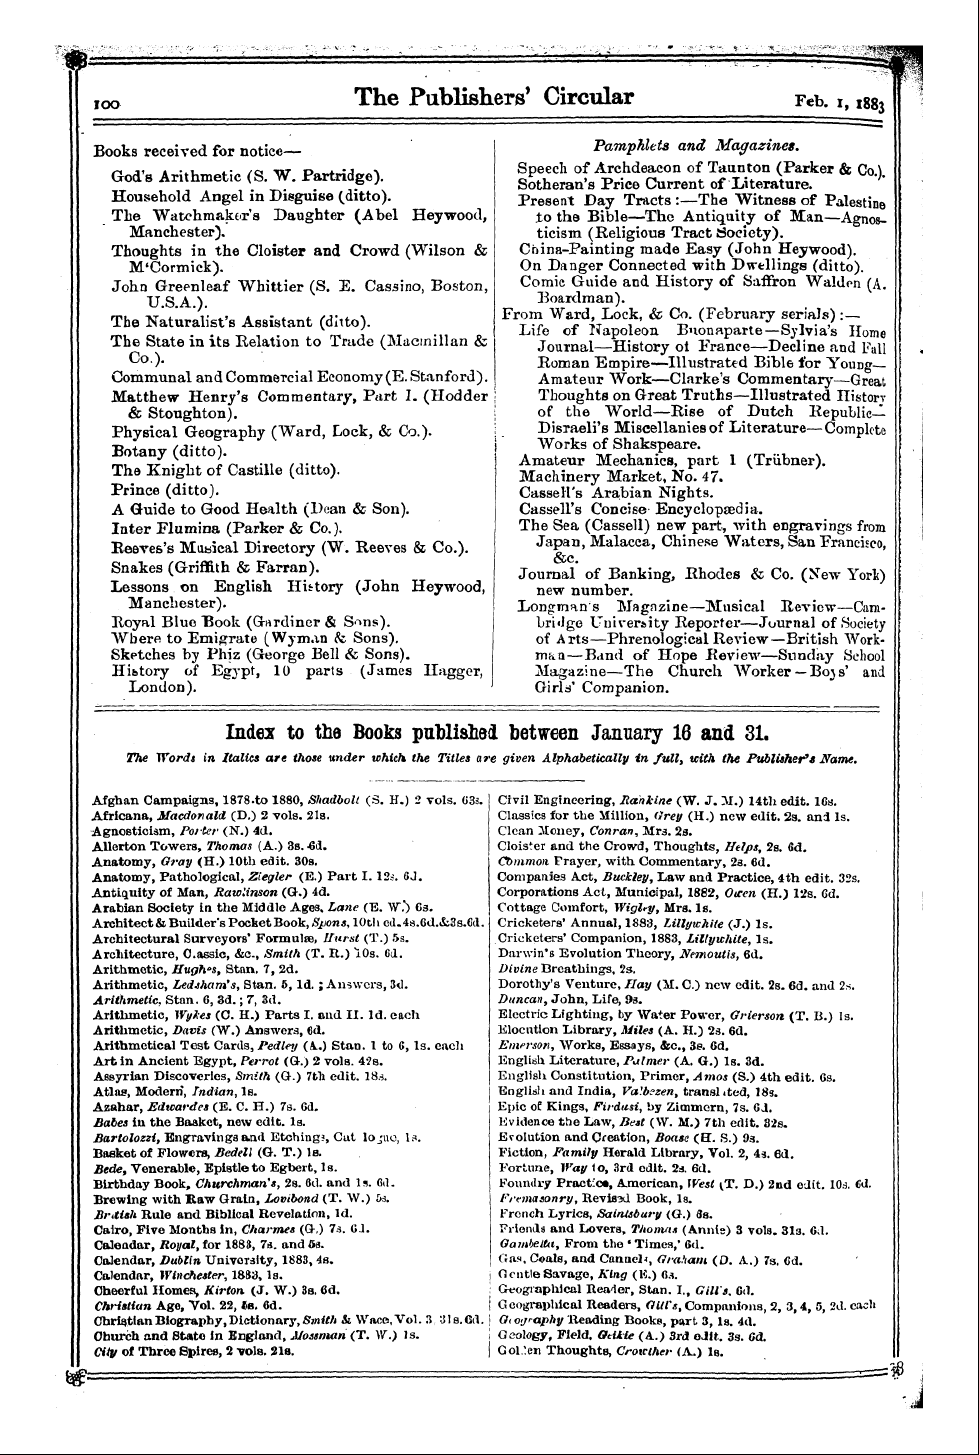 Publishers’ Circular (1880-1890): jS F Y, 1st edition: 12